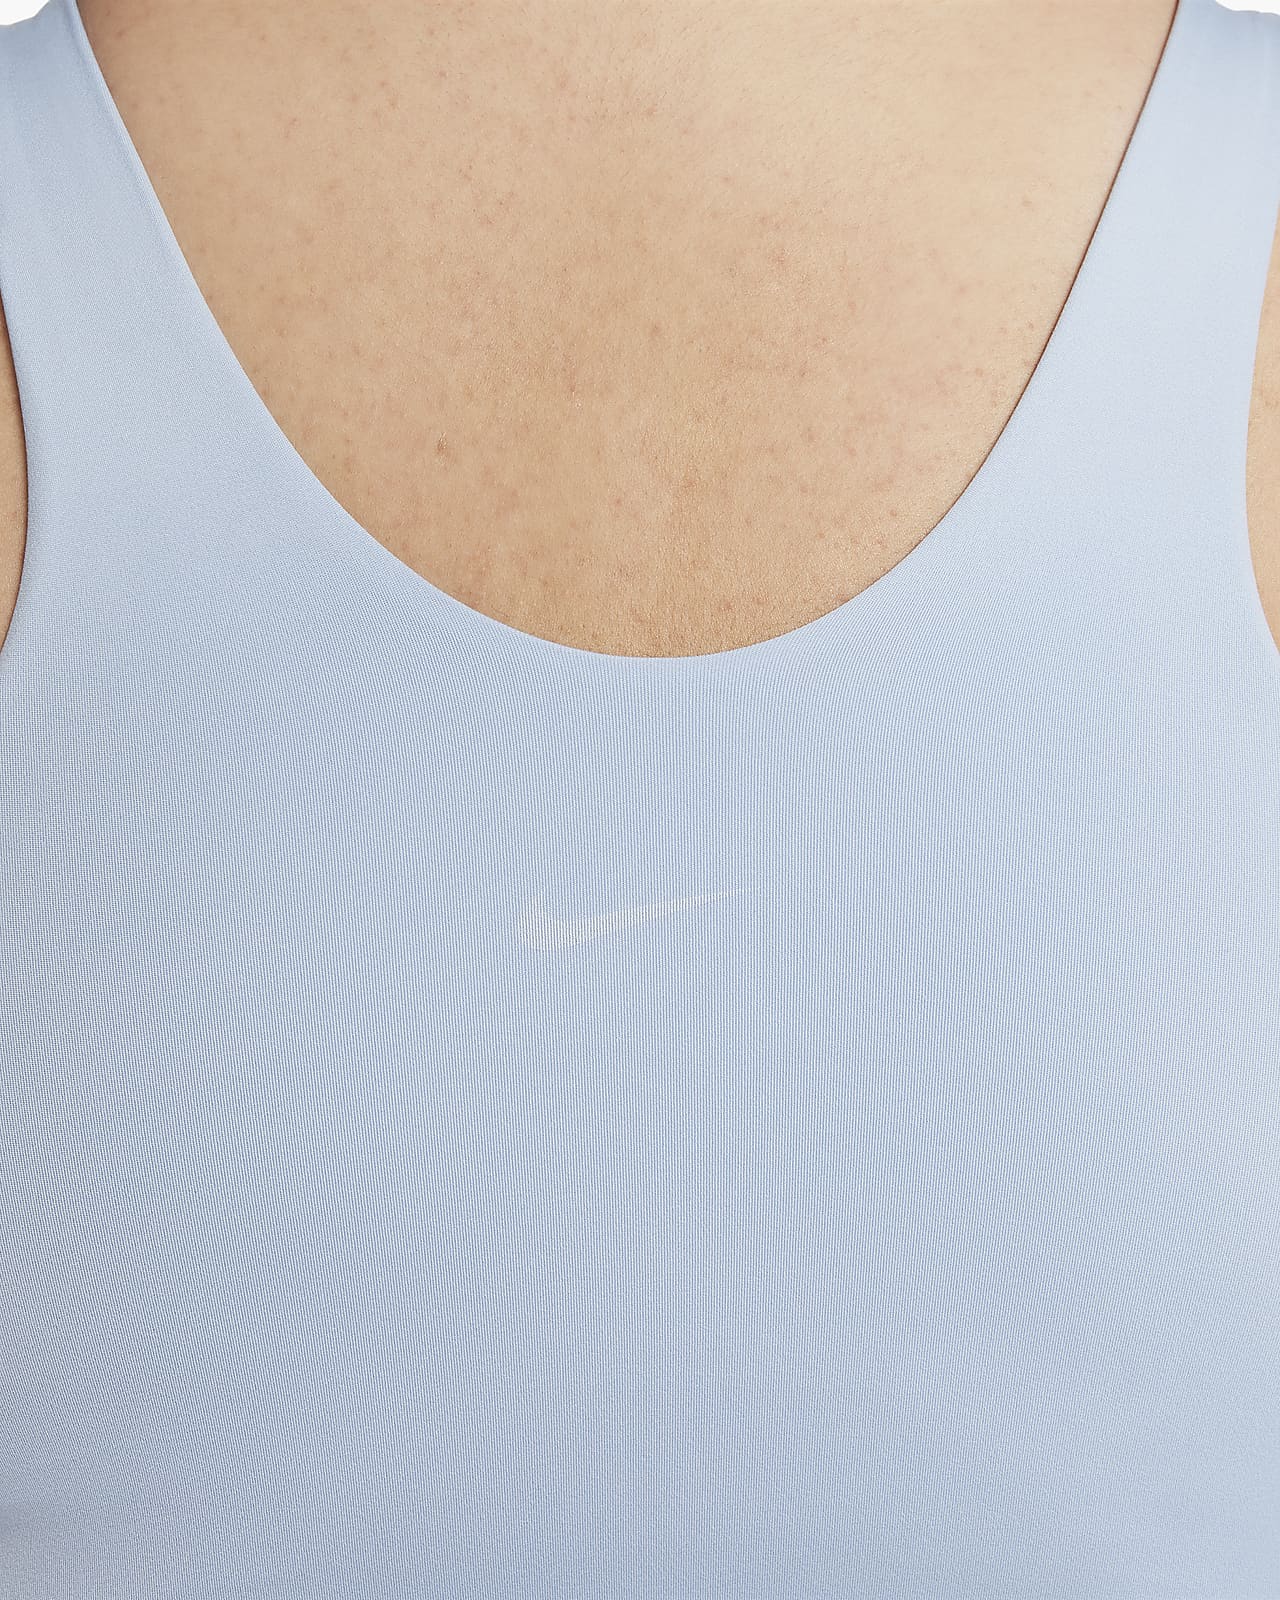 Nike Alate Women's Light-Support Padded Sports Bra Tank Top (Plus Size)